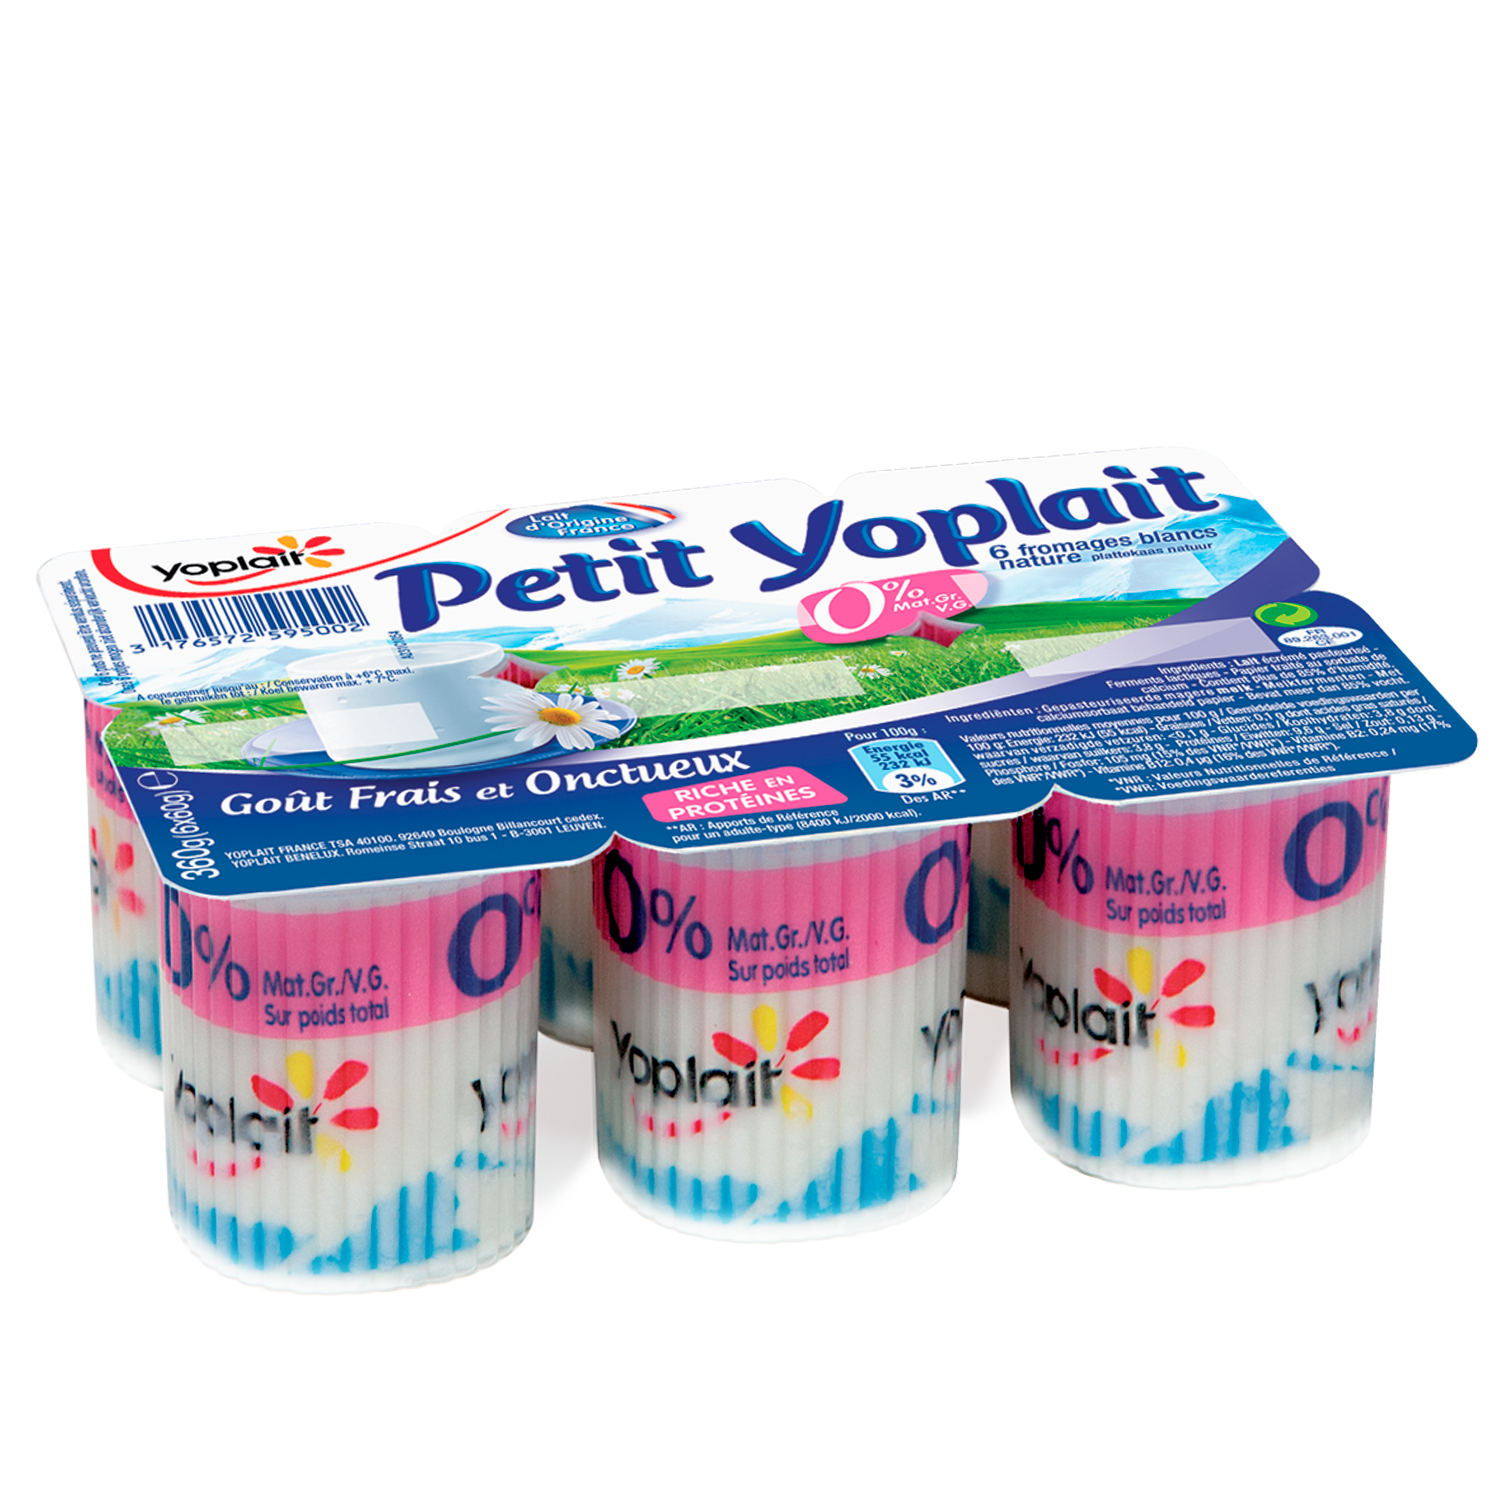 Yoplait Little plain yoplait yogurts 0% FAT 6x60g